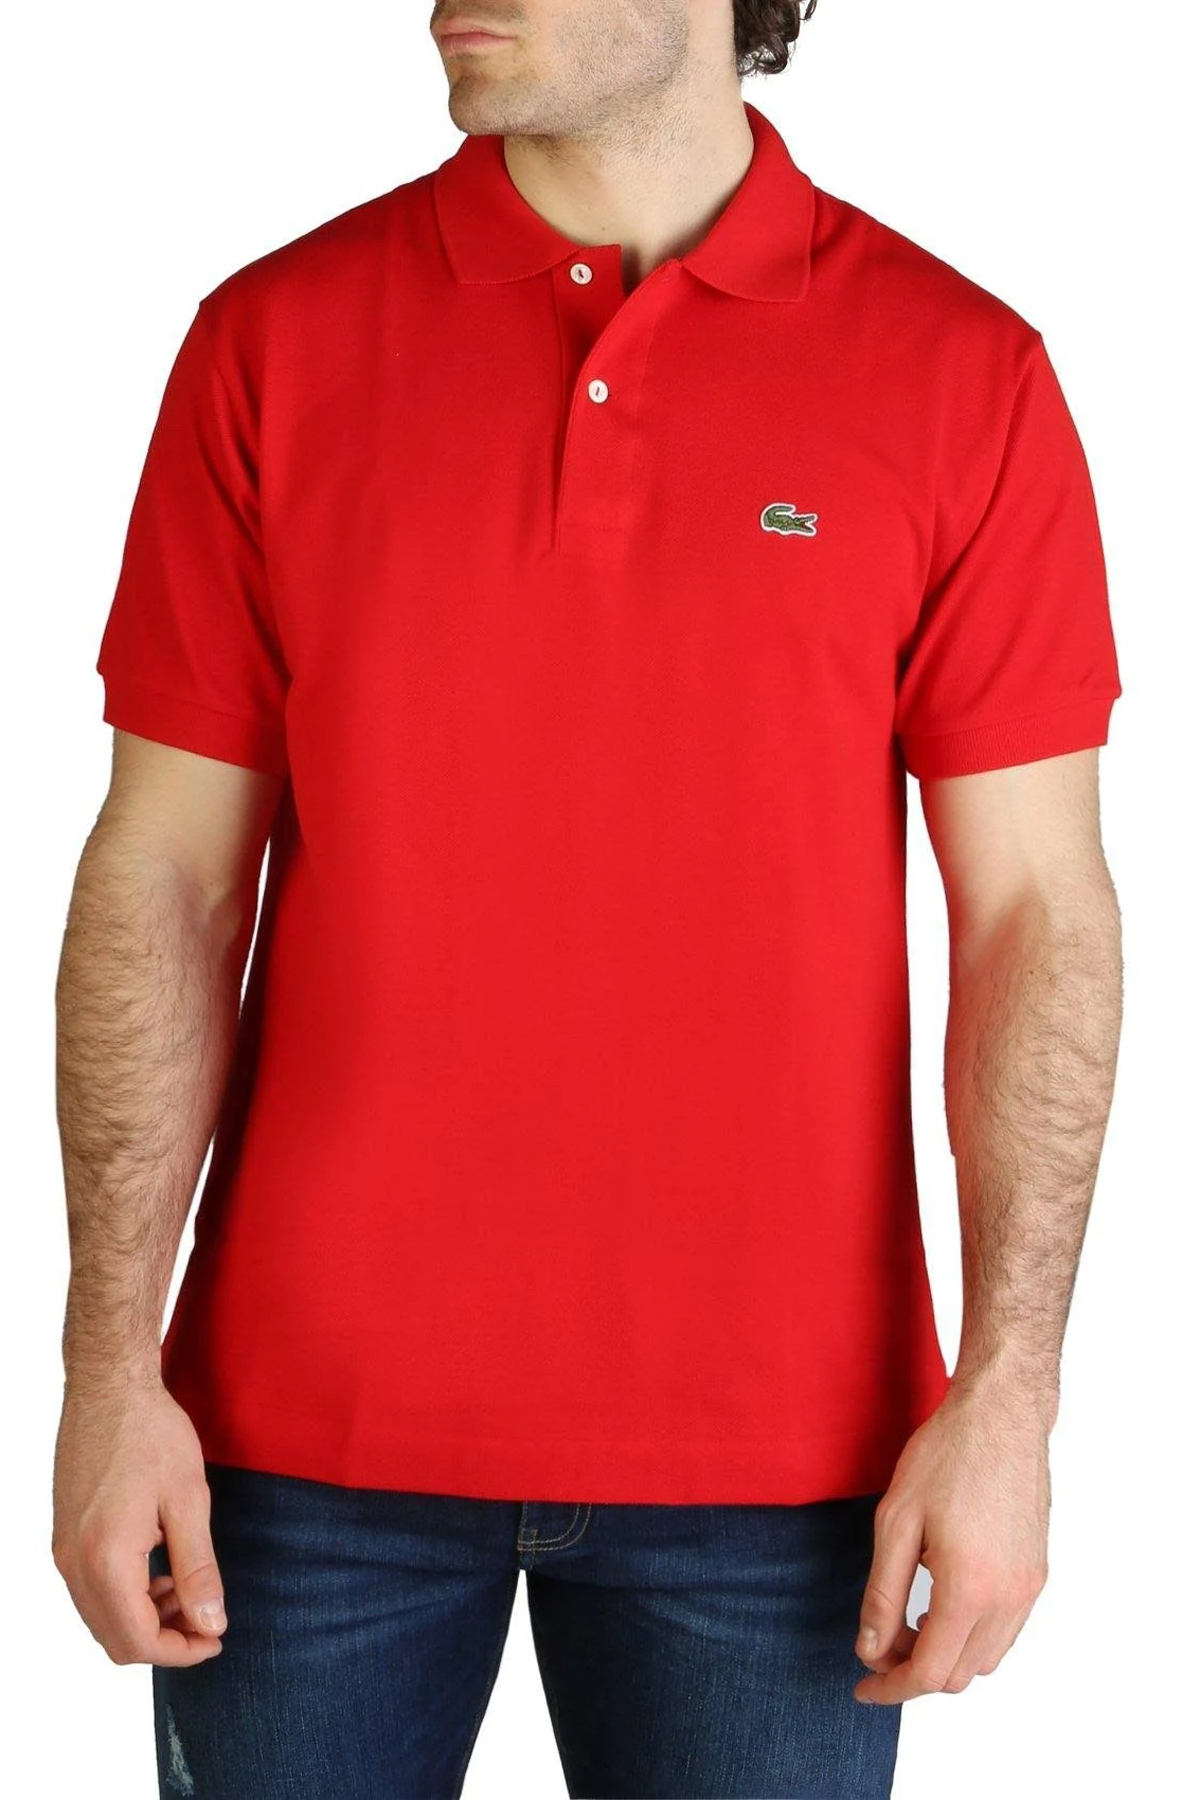 Lacoste Red L1212 custom logo polo shirts